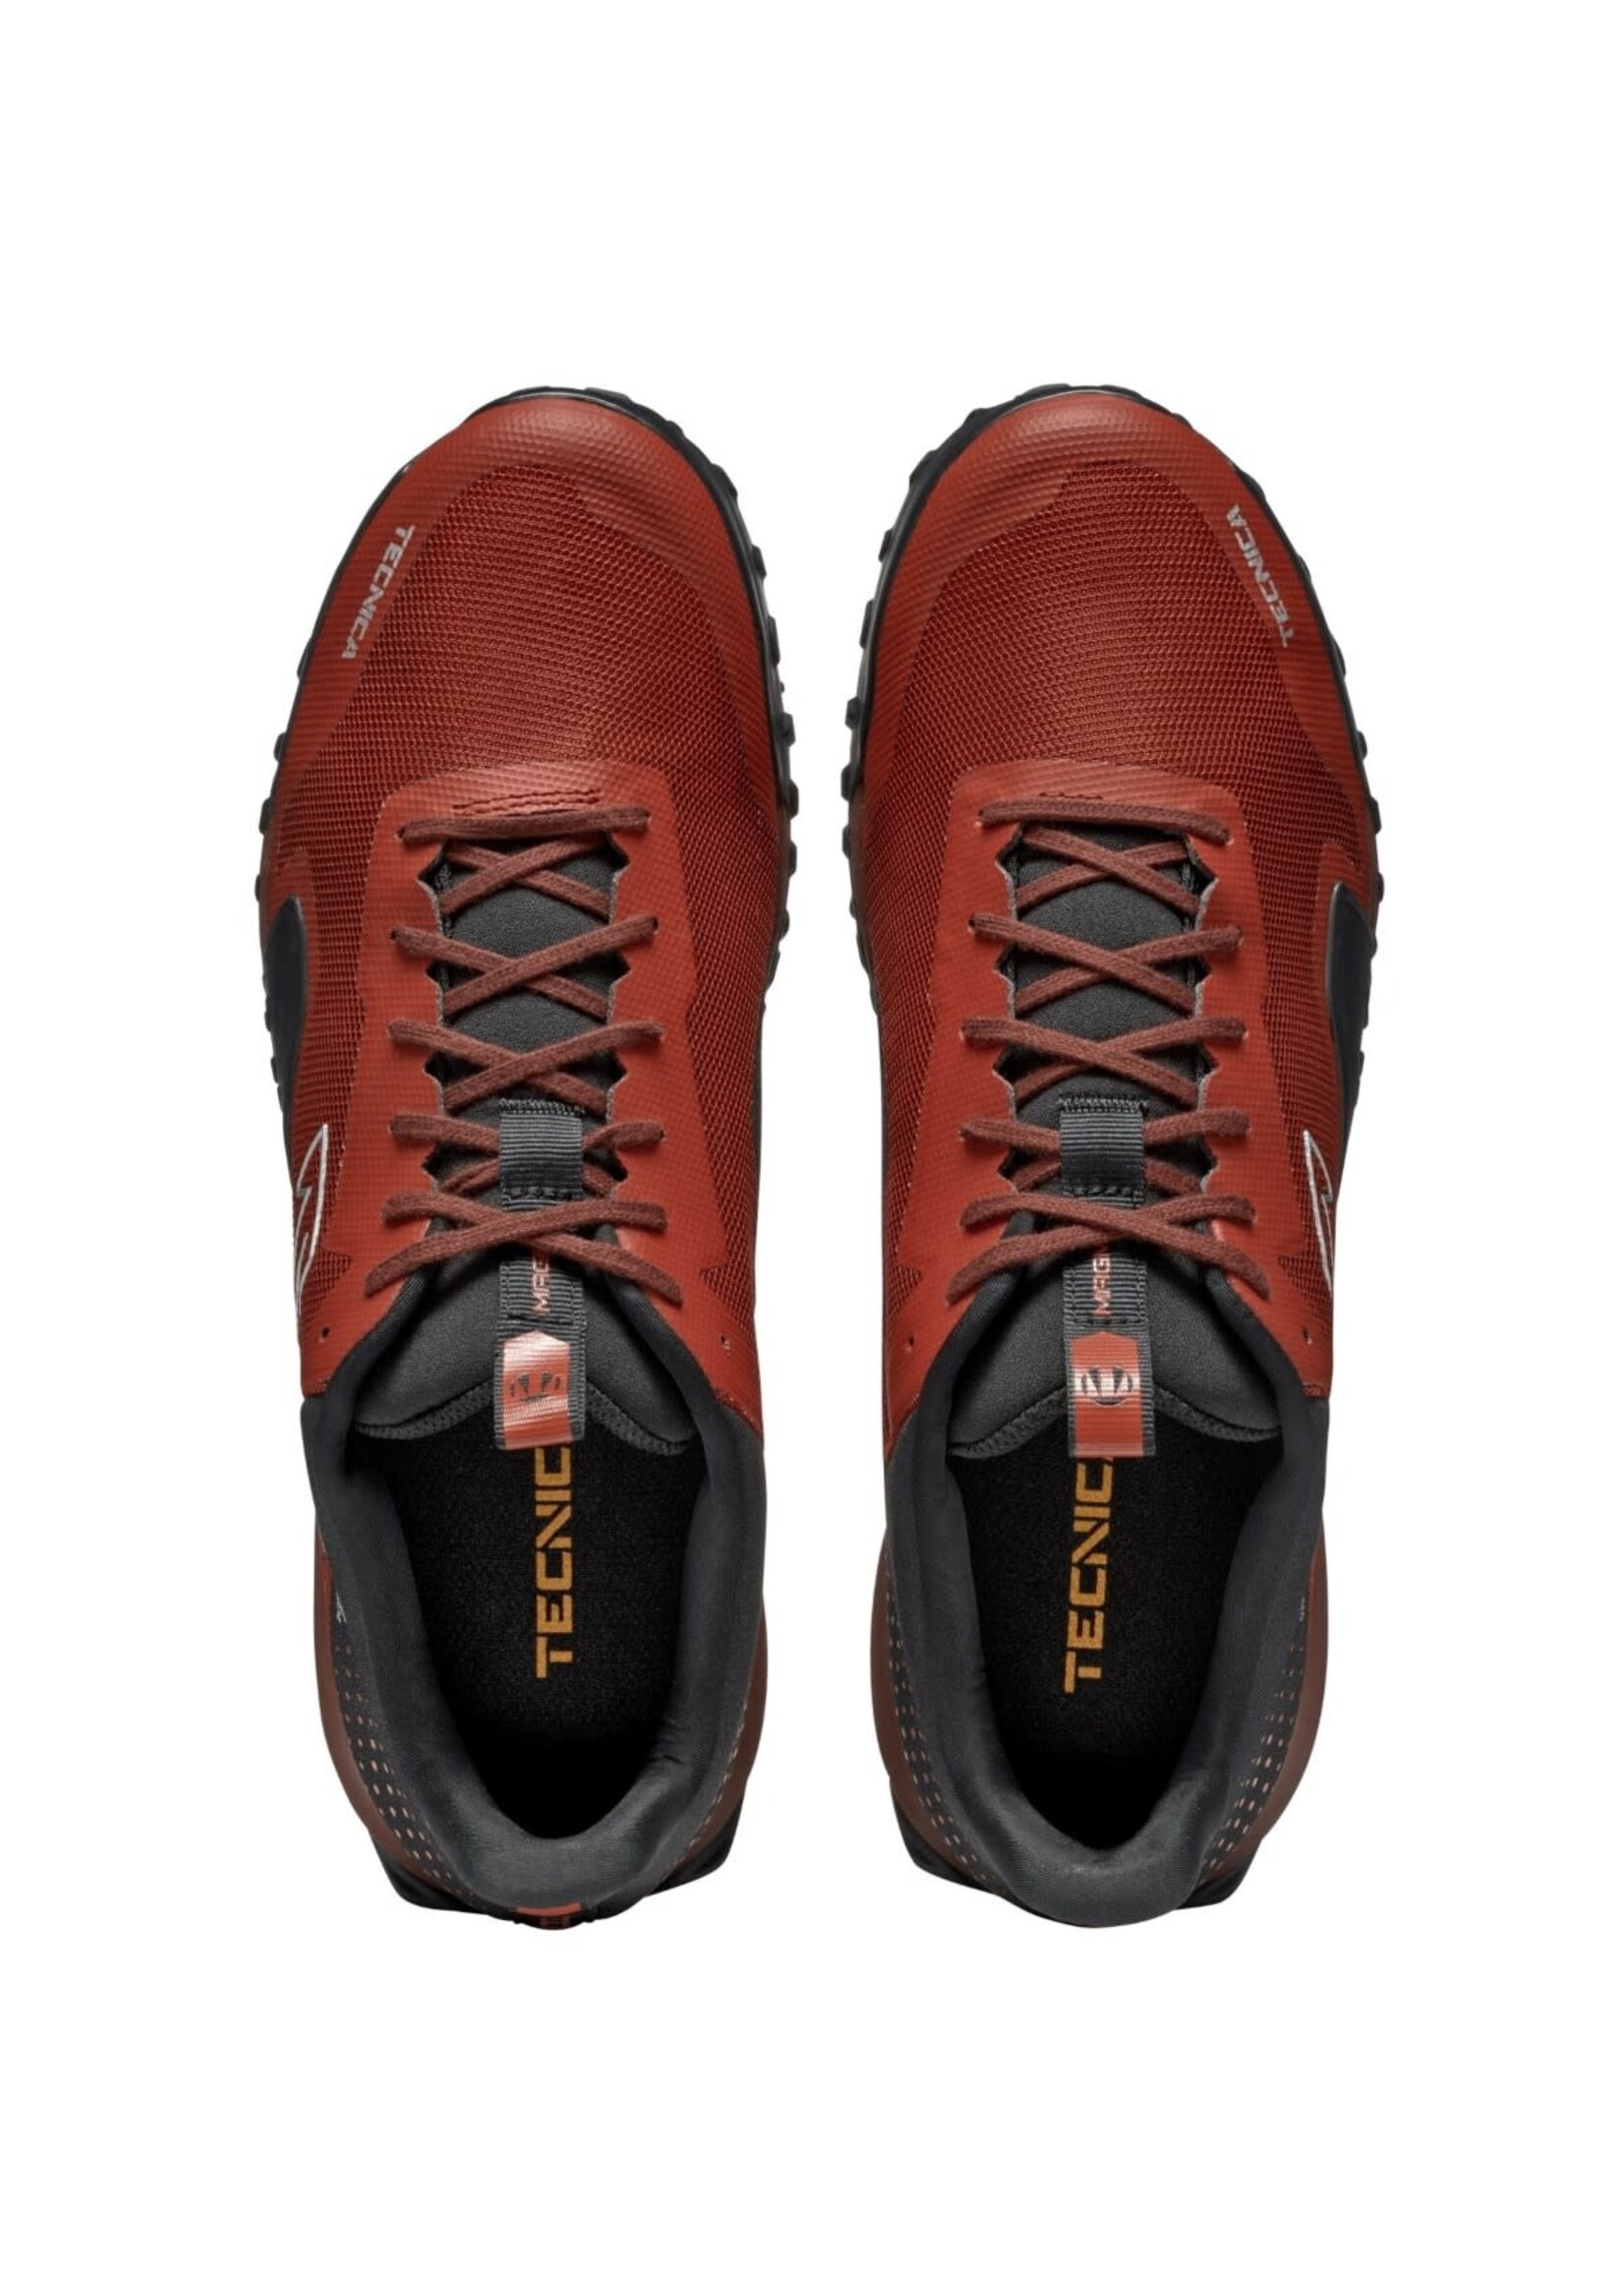 Tecnica Tecnica Magma 2.0 S GTX Hiking Shoe - Men